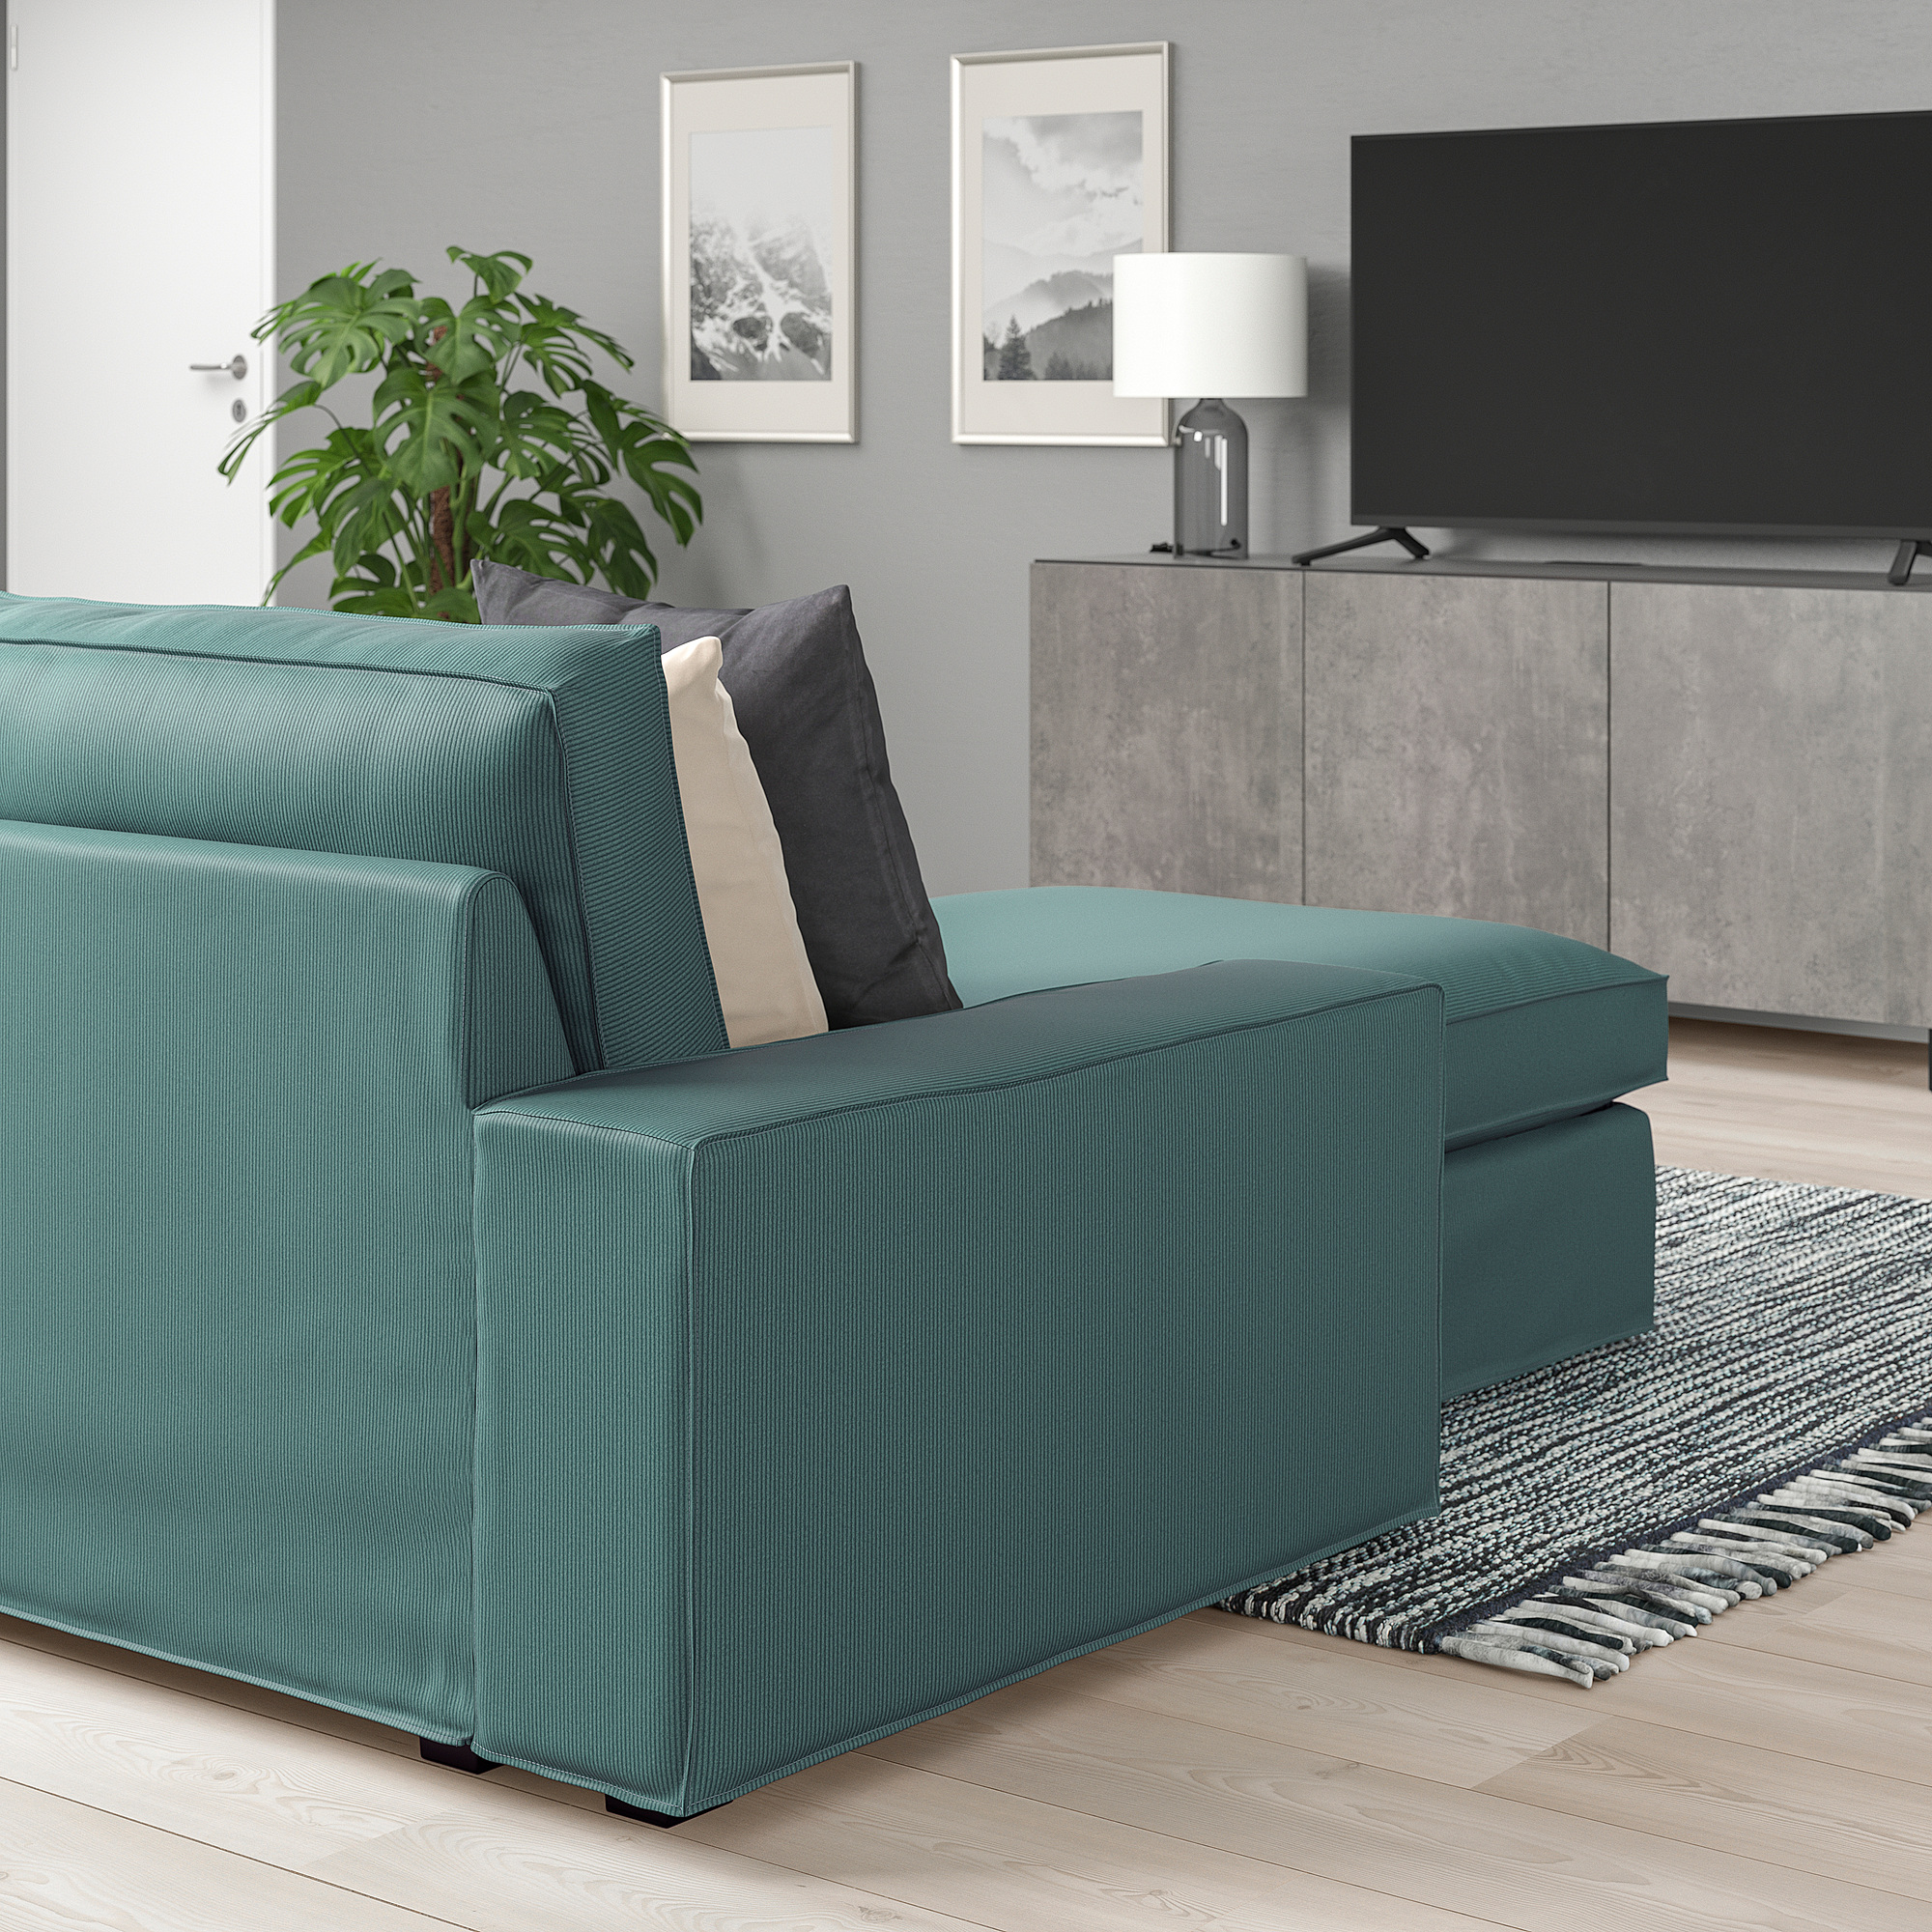 KIVIK 3-seat sofa with chaise longue